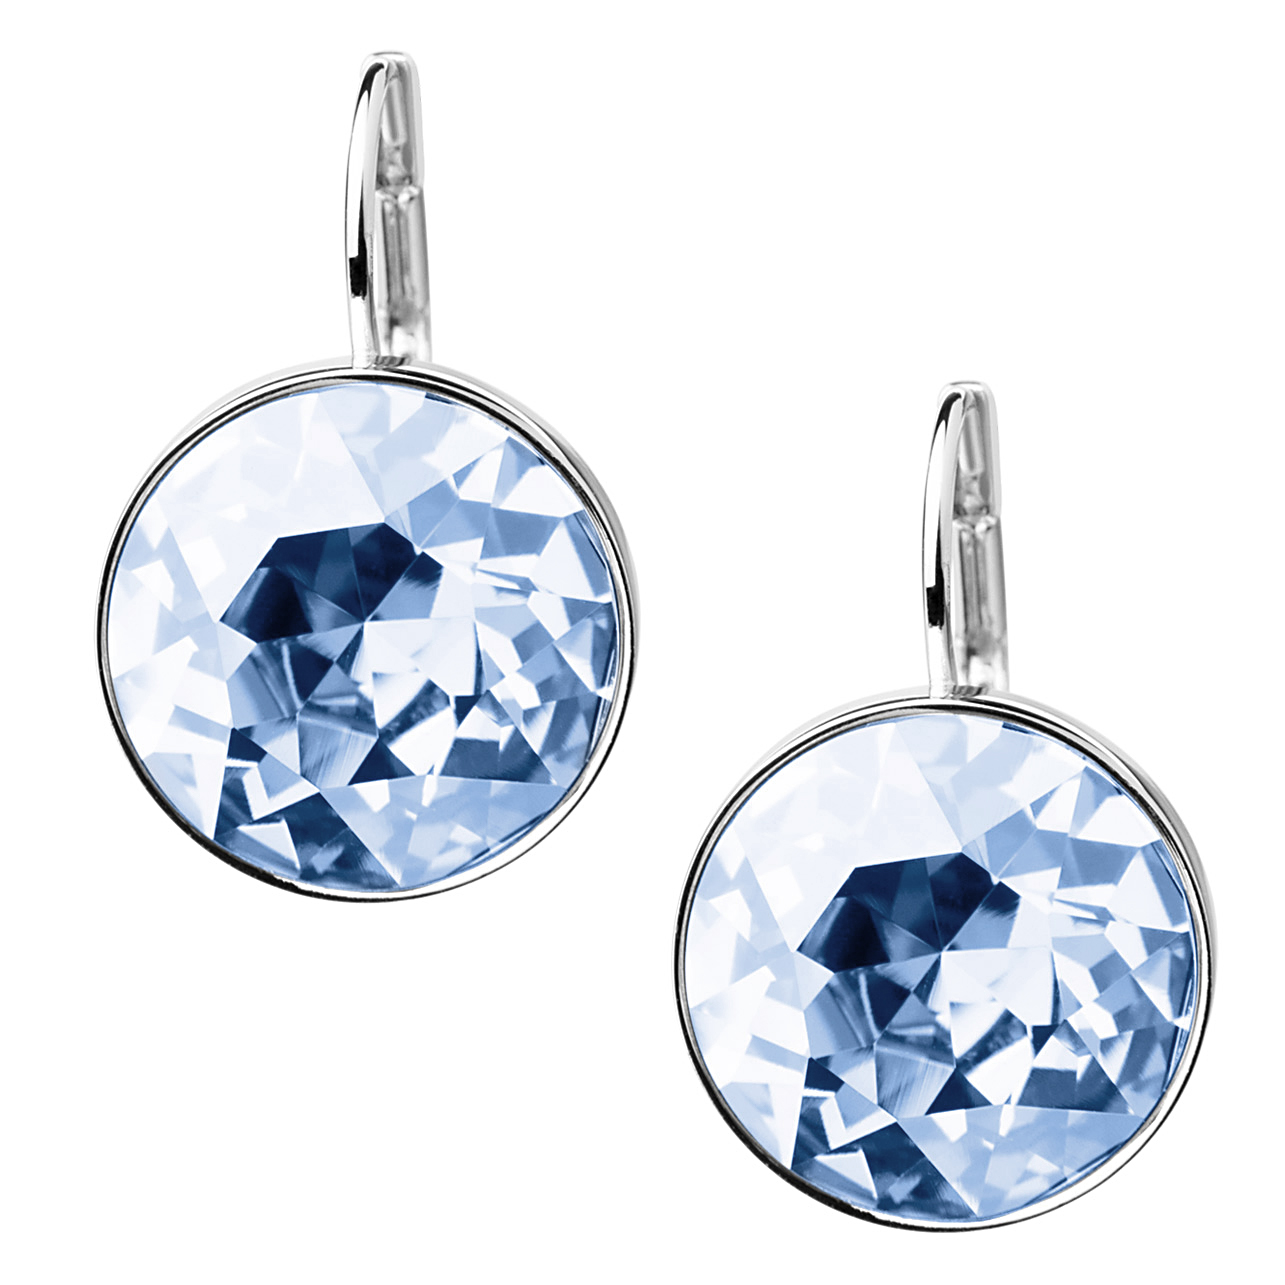 NEW Swarovski Bella Mini Light Sapphire Earrings | eBay